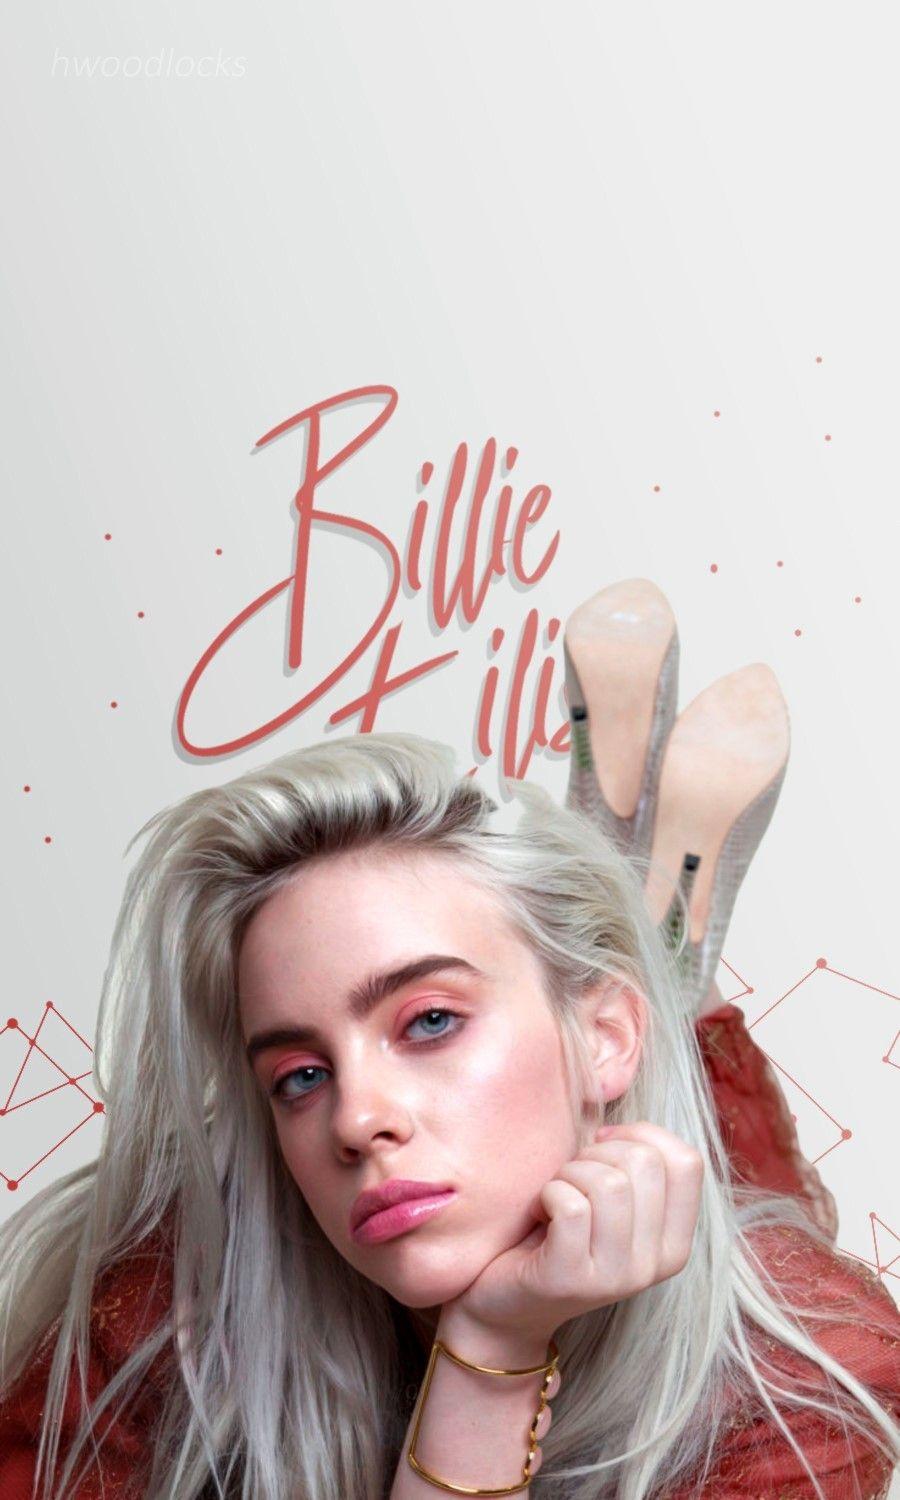 Aesthetic Billie Eilish Wallpapers - Top 35 Best Aesthetic Billie Eilish  Wallpapers Download